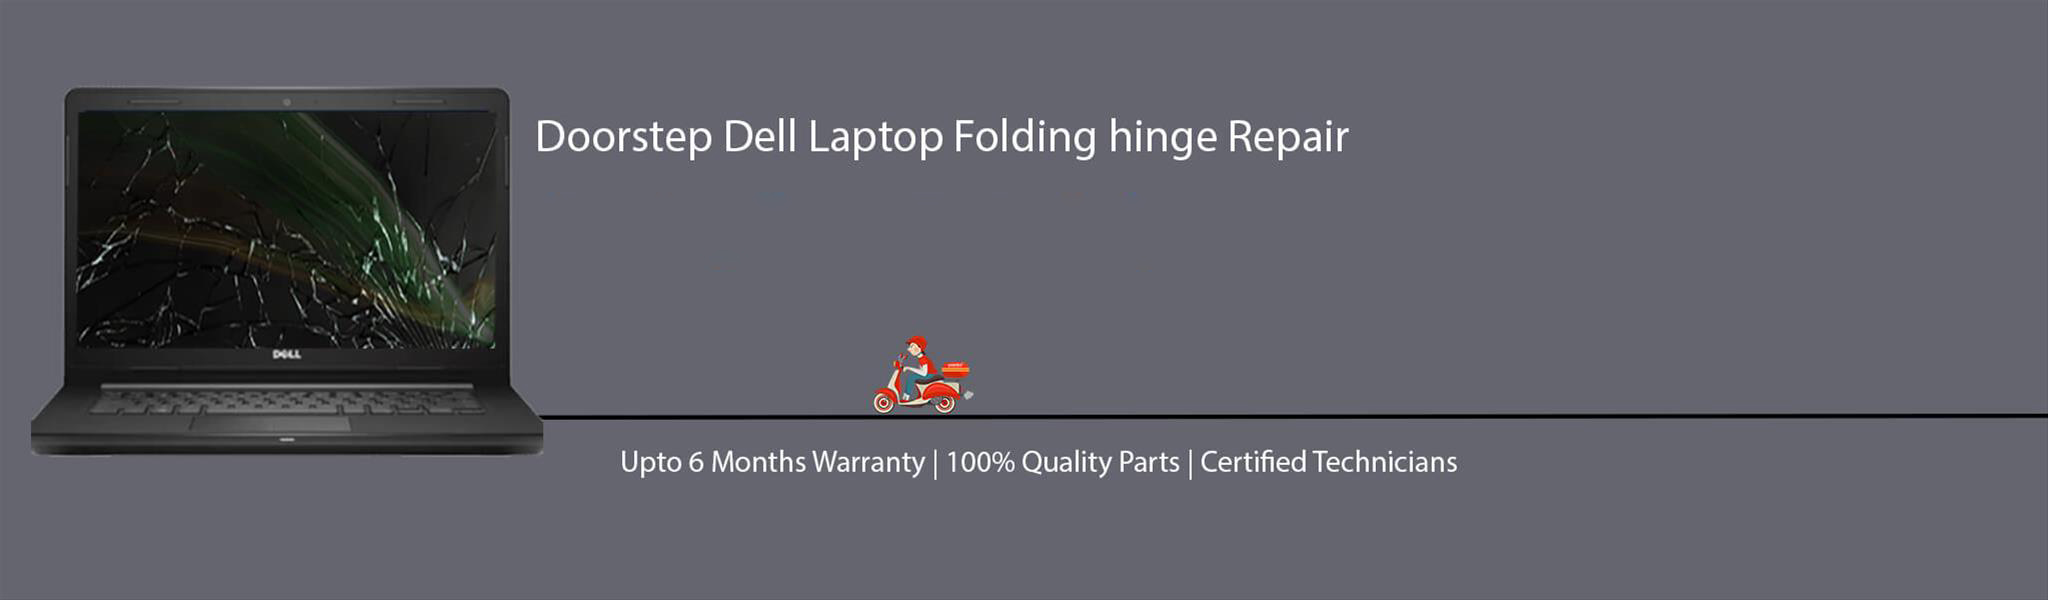 dell-laptop-folding-hinge-repair.jpg